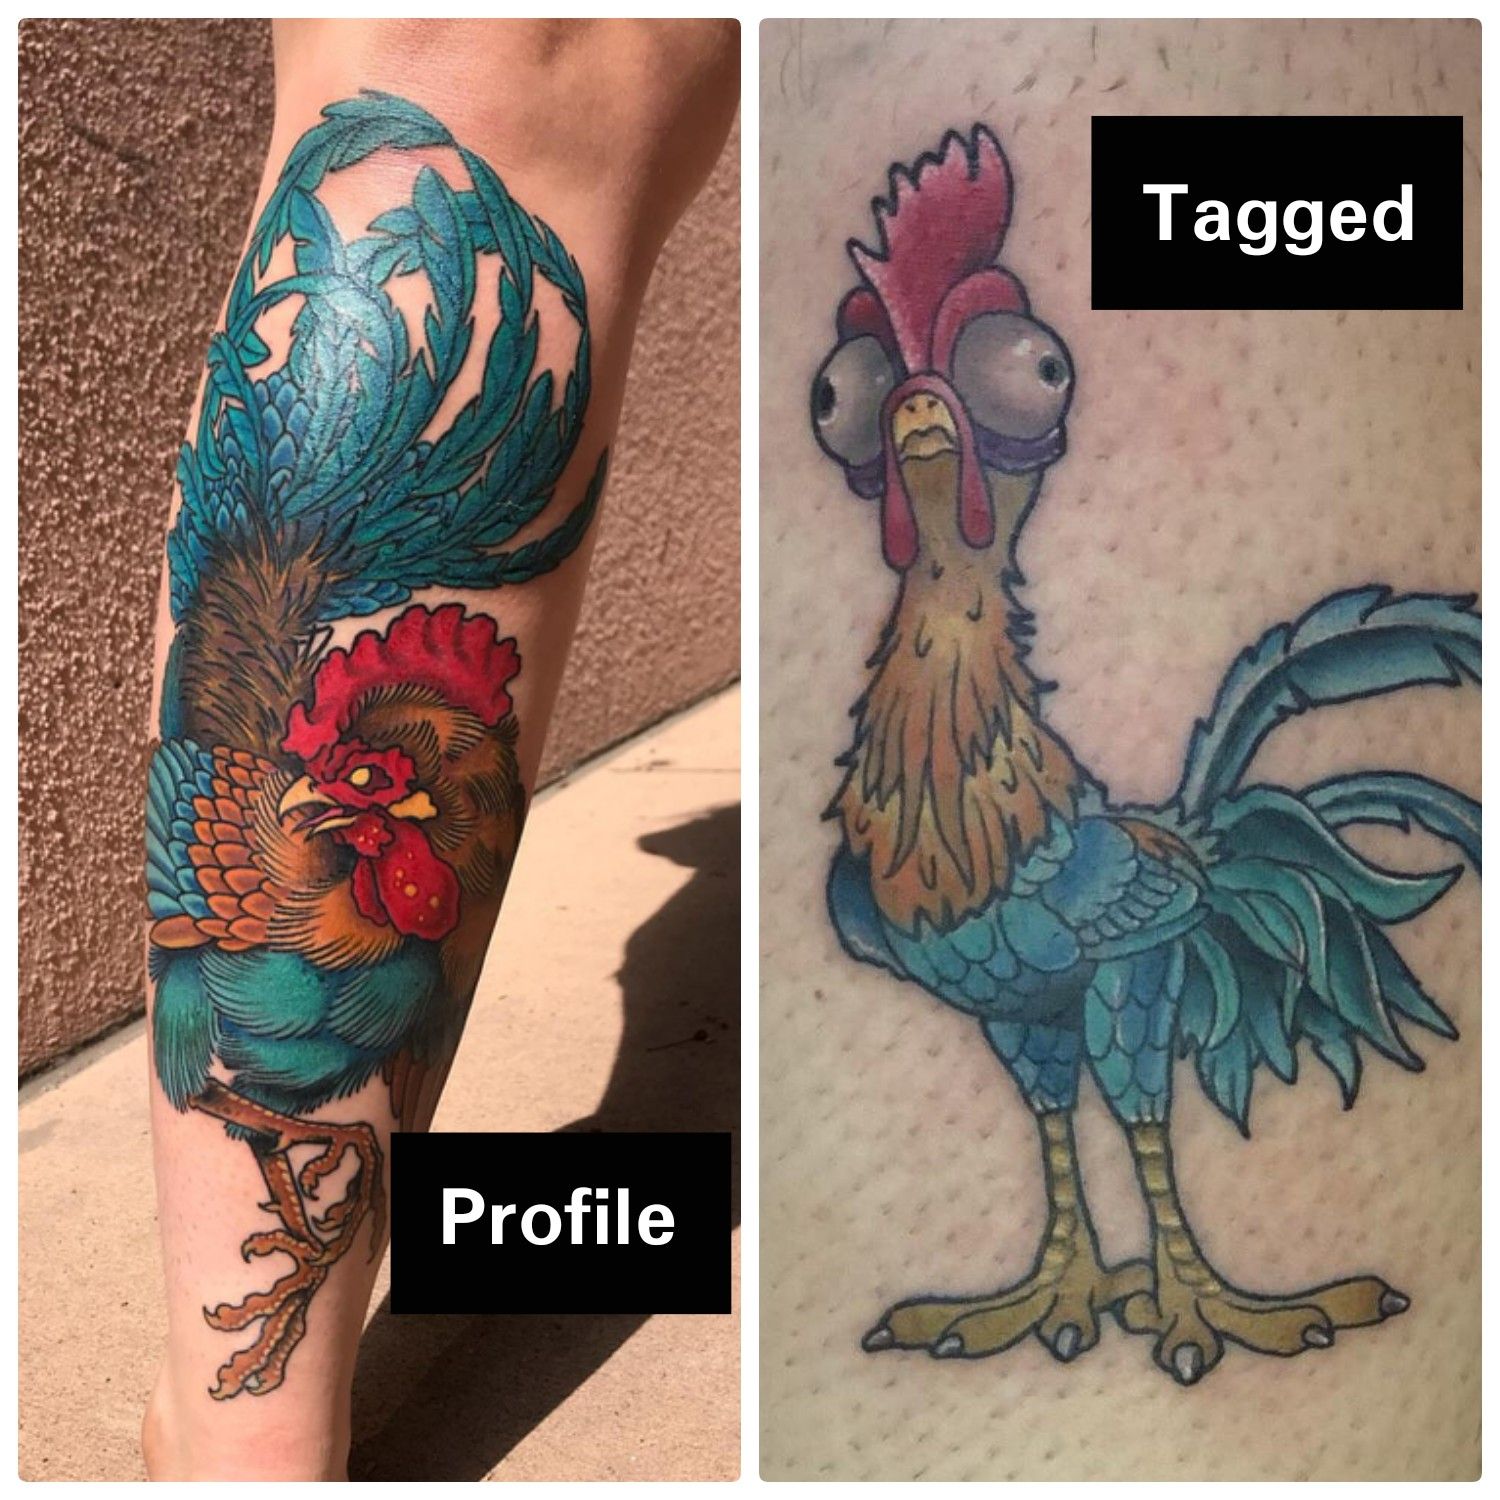 Tagged vs Profile pics, Tattoo edition